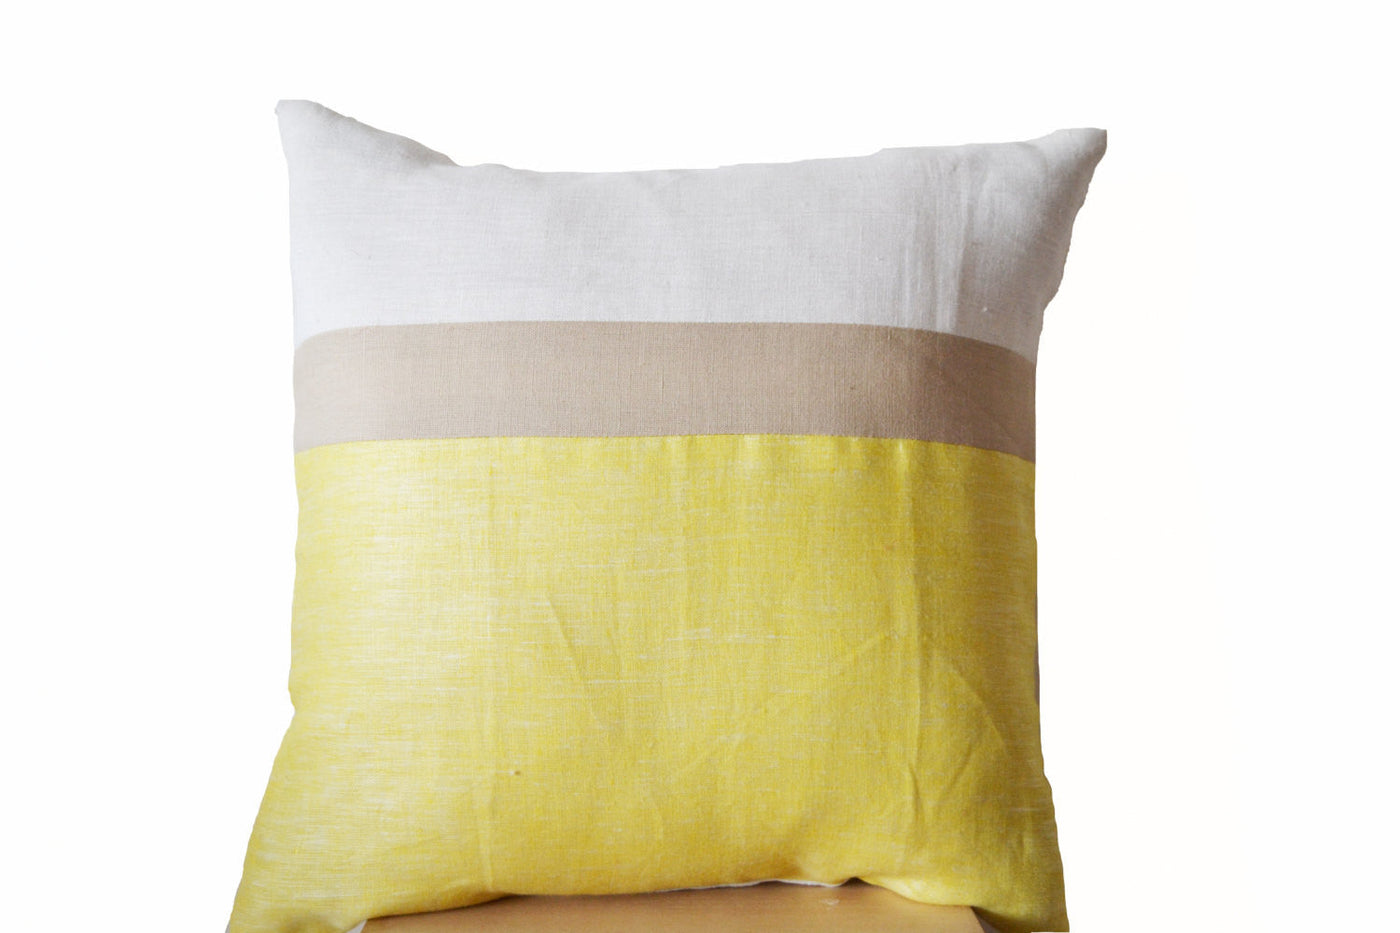 Yellow Pillow -Throw Pillows color block -Couch Pillows - Decorative cushion cover- Spring Throw pillow - gift- 16X16- Yellow Linen Pillows by Amore Beauté